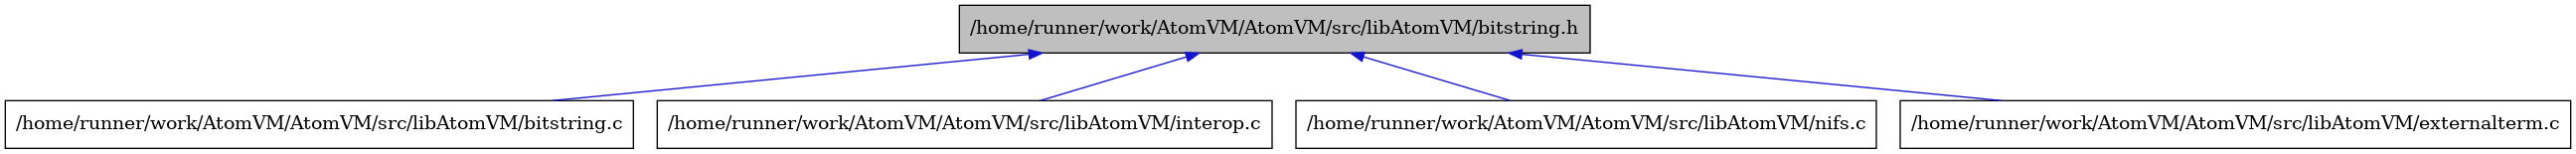 digraph {
    graph [bgcolor="#00000000"]
    node [shape=rectangle style=filled fillcolor="#FFFFFF" font=Helvetica padding=2]
    edge [color="#1414CE"]
    "2" [label="/home/runner/work/AtomVM/AtomVM/src/libAtomVM/bitstring.c" tooltip="/home/runner/work/AtomVM/AtomVM/src/libAtomVM/bitstring.c"]
    "1" [label="/home/runner/work/AtomVM/AtomVM/src/libAtomVM/bitstring.h" tooltip="/home/runner/work/AtomVM/AtomVM/src/libAtomVM/bitstring.h" fillcolor="#BFBFBF"]
    "4" [label="/home/runner/work/AtomVM/AtomVM/src/libAtomVM/interop.c" tooltip="/home/runner/work/AtomVM/AtomVM/src/libAtomVM/interop.c"]
    "5" [label="/home/runner/work/AtomVM/AtomVM/src/libAtomVM/nifs.c" tooltip="/home/runner/work/AtomVM/AtomVM/src/libAtomVM/nifs.c"]
    "3" [label="/home/runner/work/AtomVM/AtomVM/src/libAtomVM/externalterm.c" tooltip="/home/runner/work/AtomVM/AtomVM/src/libAtomVM/externalterm.c"]
    "1" -> "2" [dir=back tooltip="include"]
    "1" -> "3" [dir=back tooltip="include"]
    "1" -> "4" [dir=back tooltip="include"]
    "1" -> "5" [dir=back tooltip="include"]
}